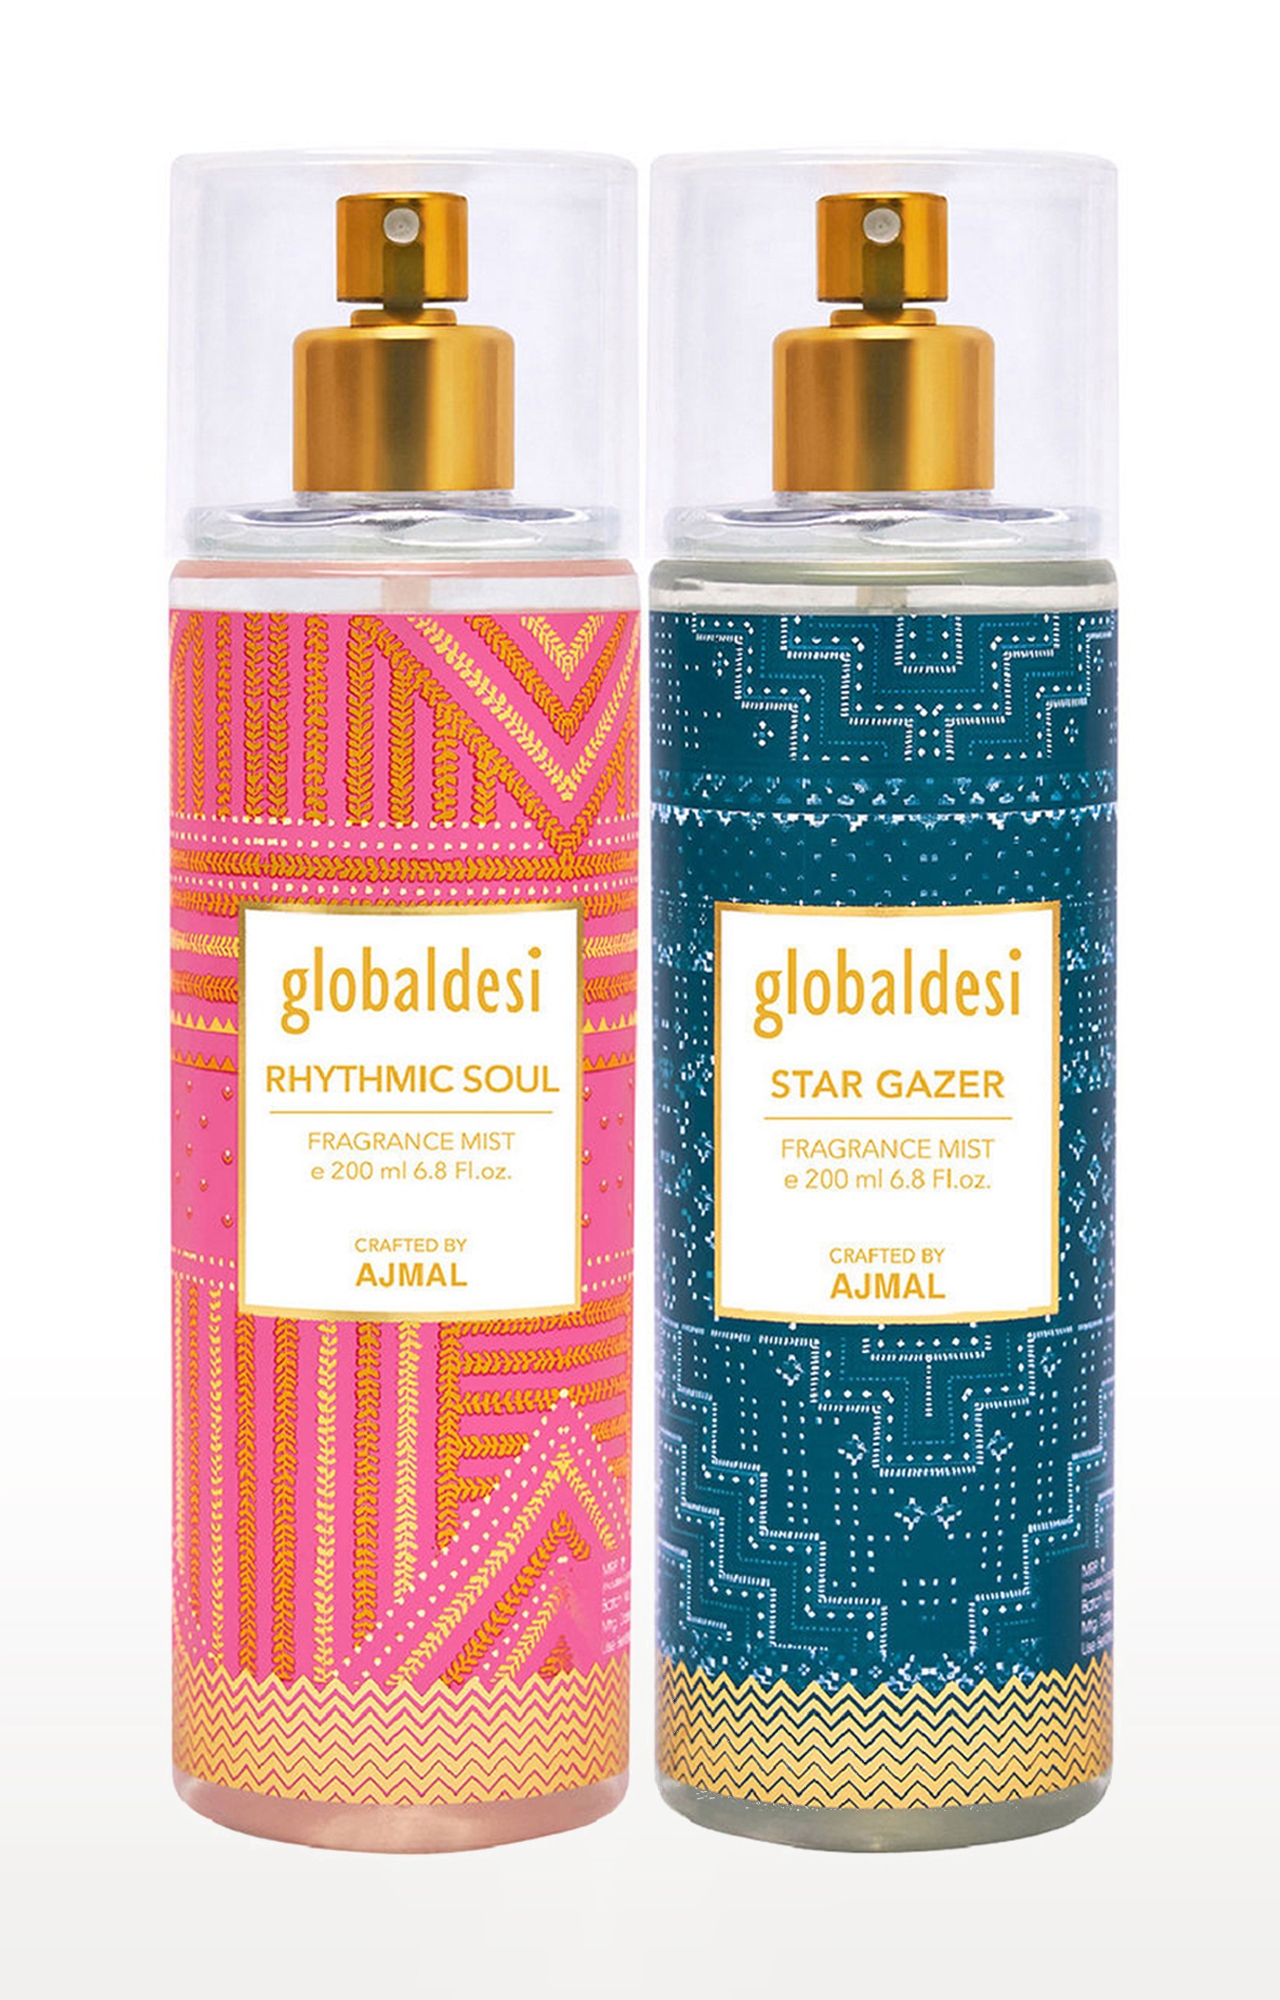 Global Desi Rhythmic Soul & Star Gazer Pack of 2 Body Mist 200ML each Long Lasting Scent Spray Gift For Women Perfume Crafted by Ajmal FREE